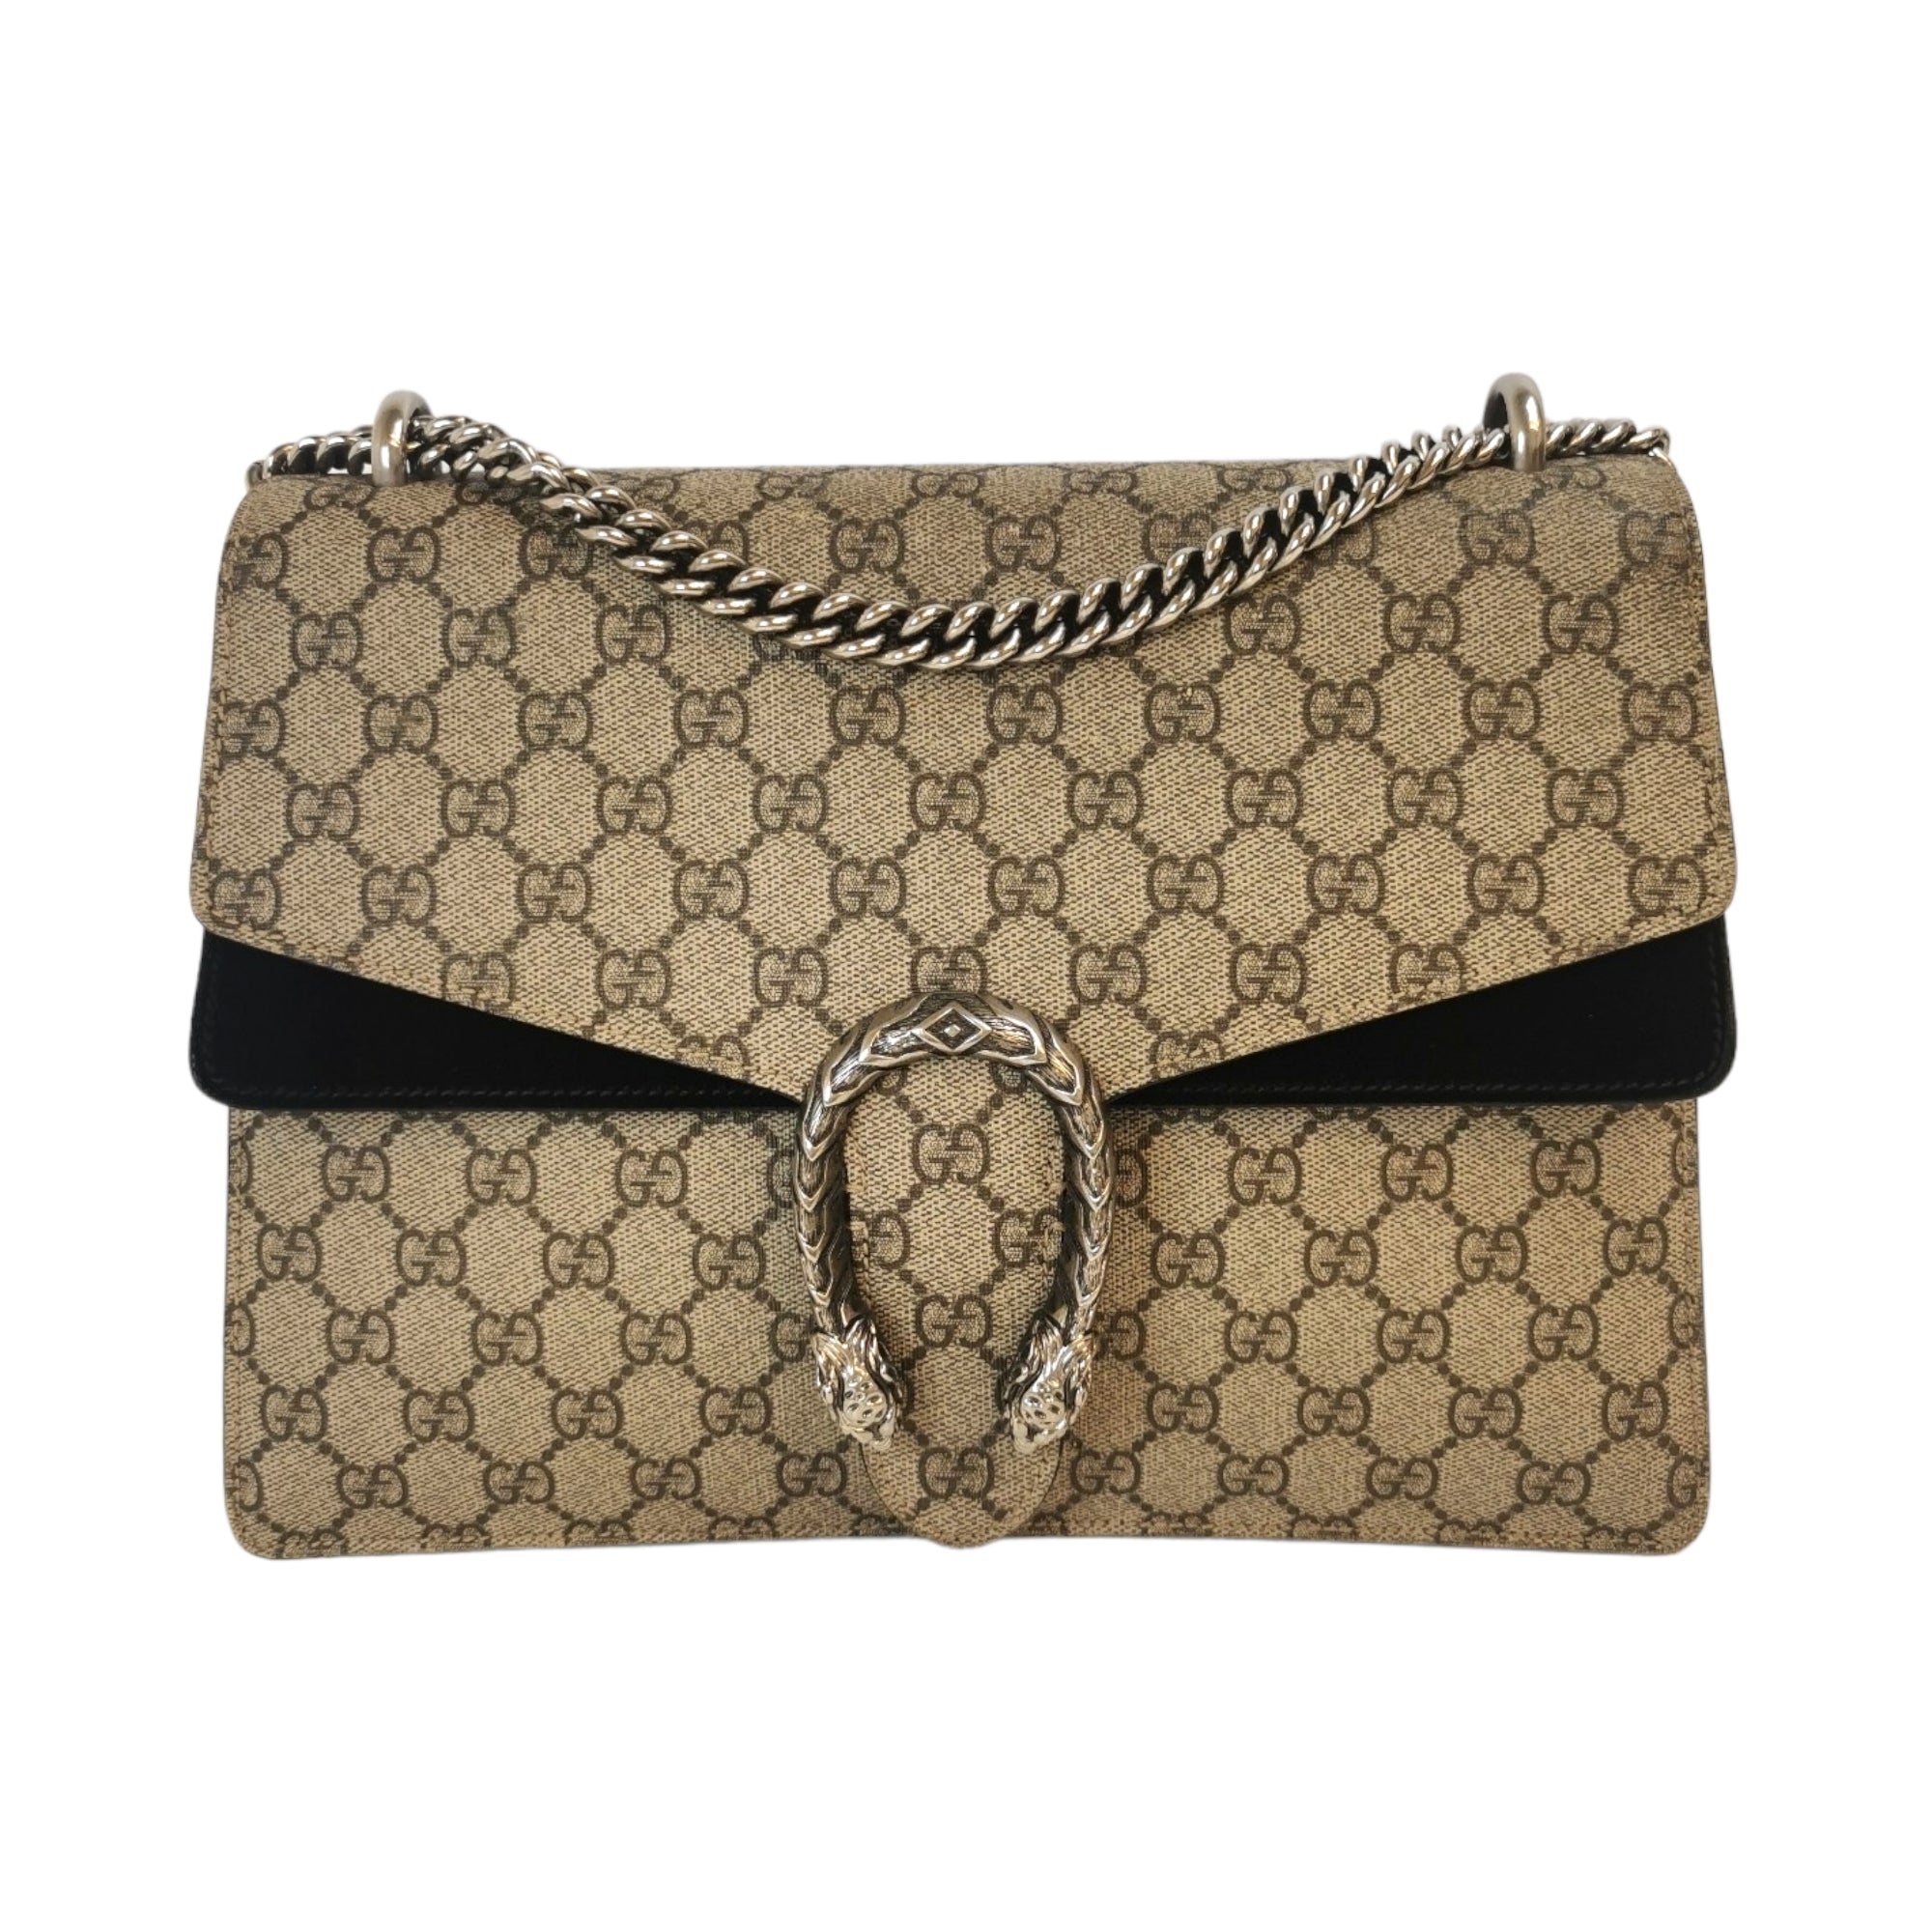 Gucci dionysus supermini gold lame leather crossbody bag